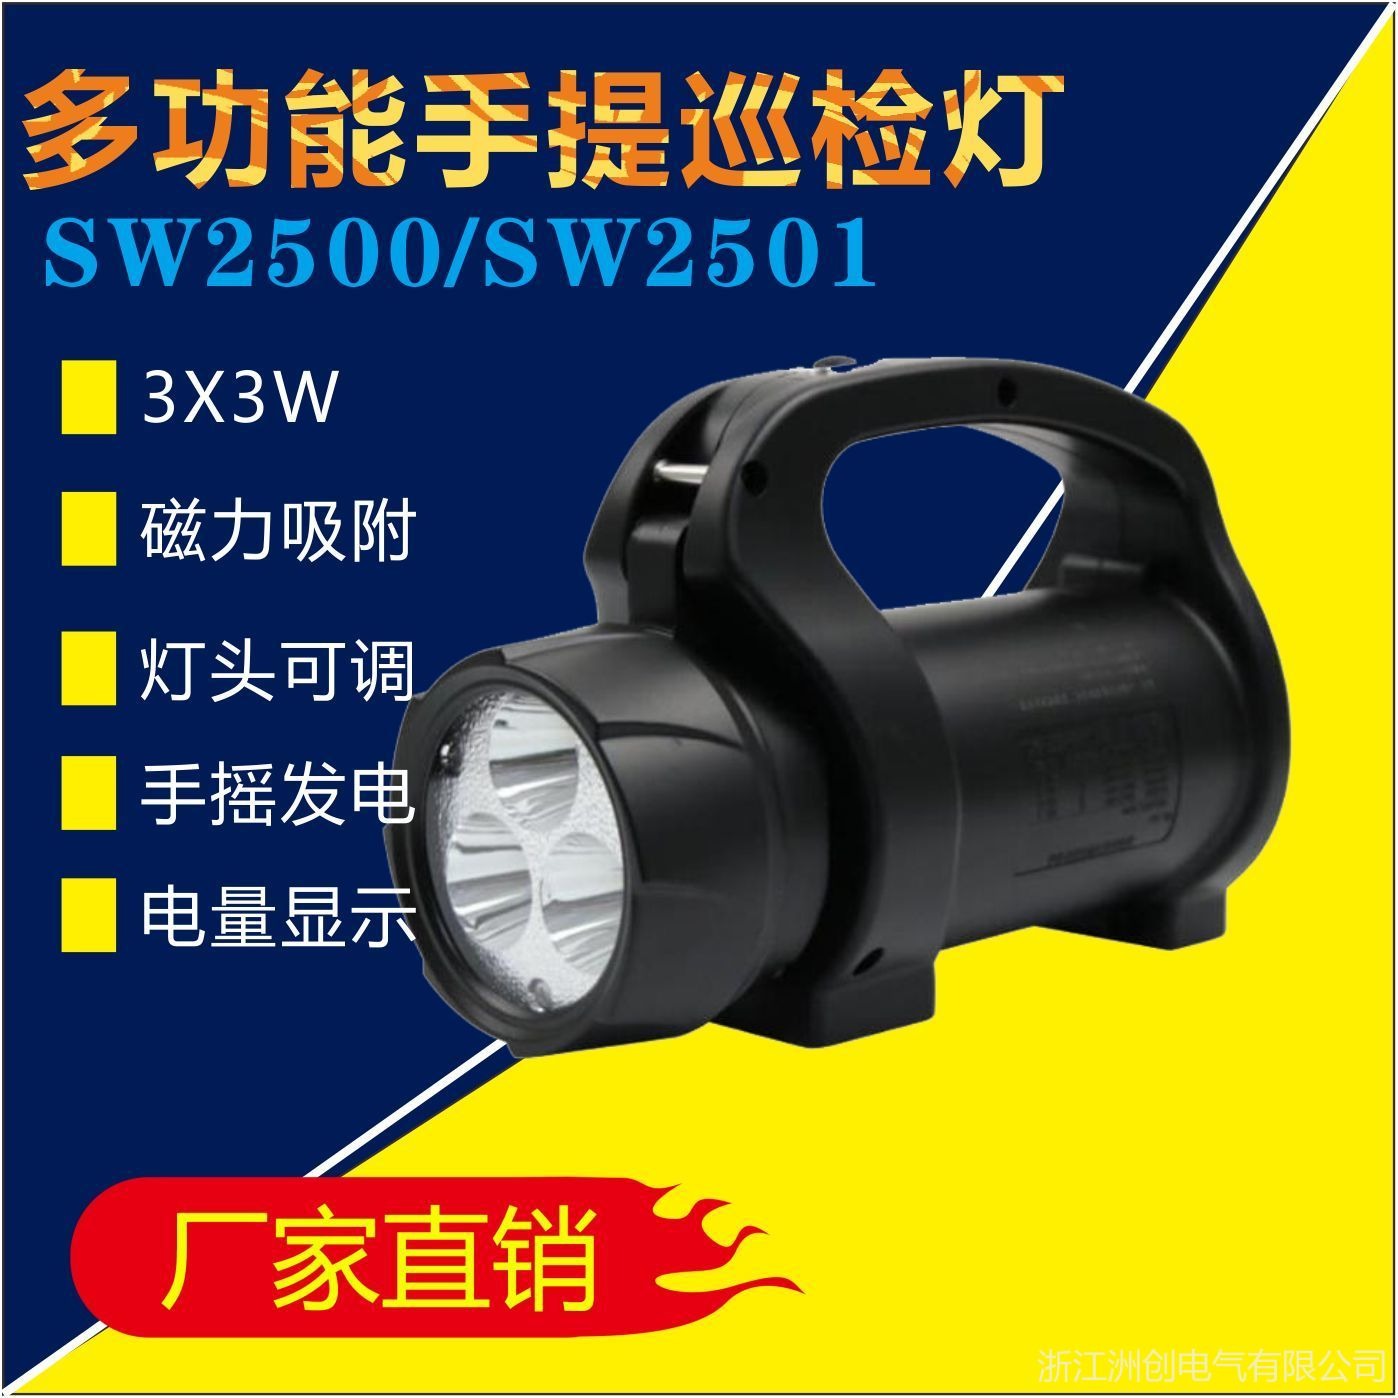 SW2511多功能手提巡检灯 SW2510磁力吸附防爆探照灯 LED手摇发电式便捷灯